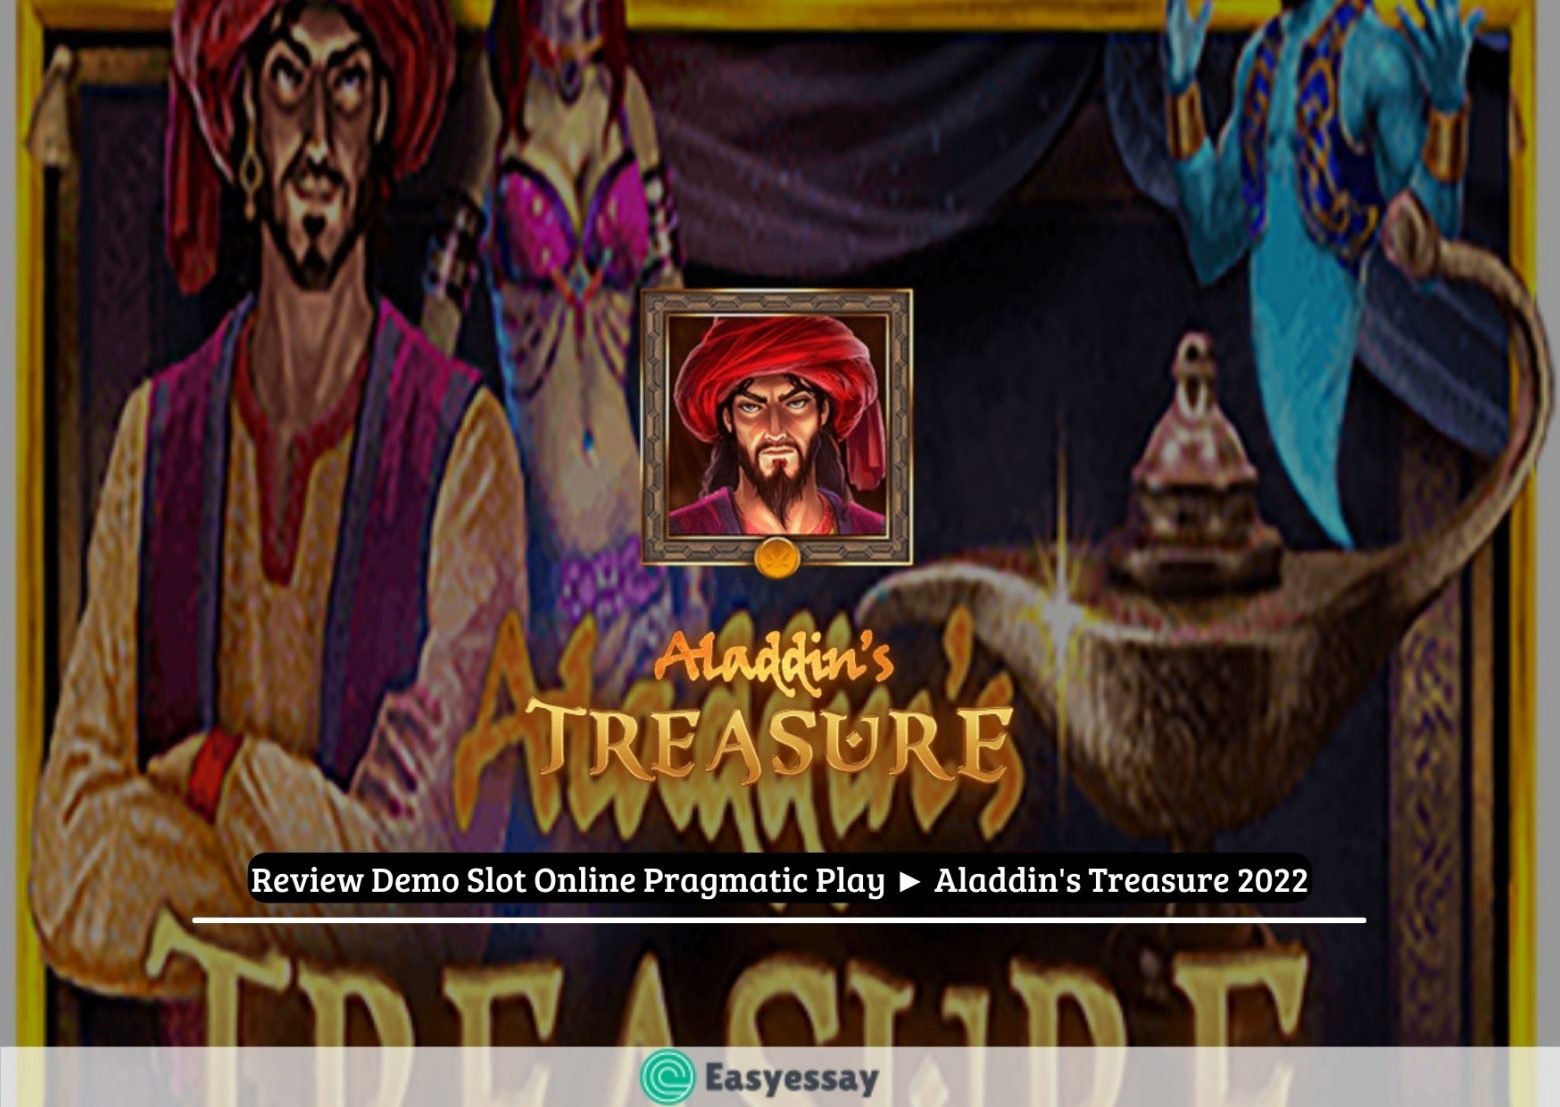 Review Demo Slot Online Pragmatic Play ► Aladdin’s Treasure 2022